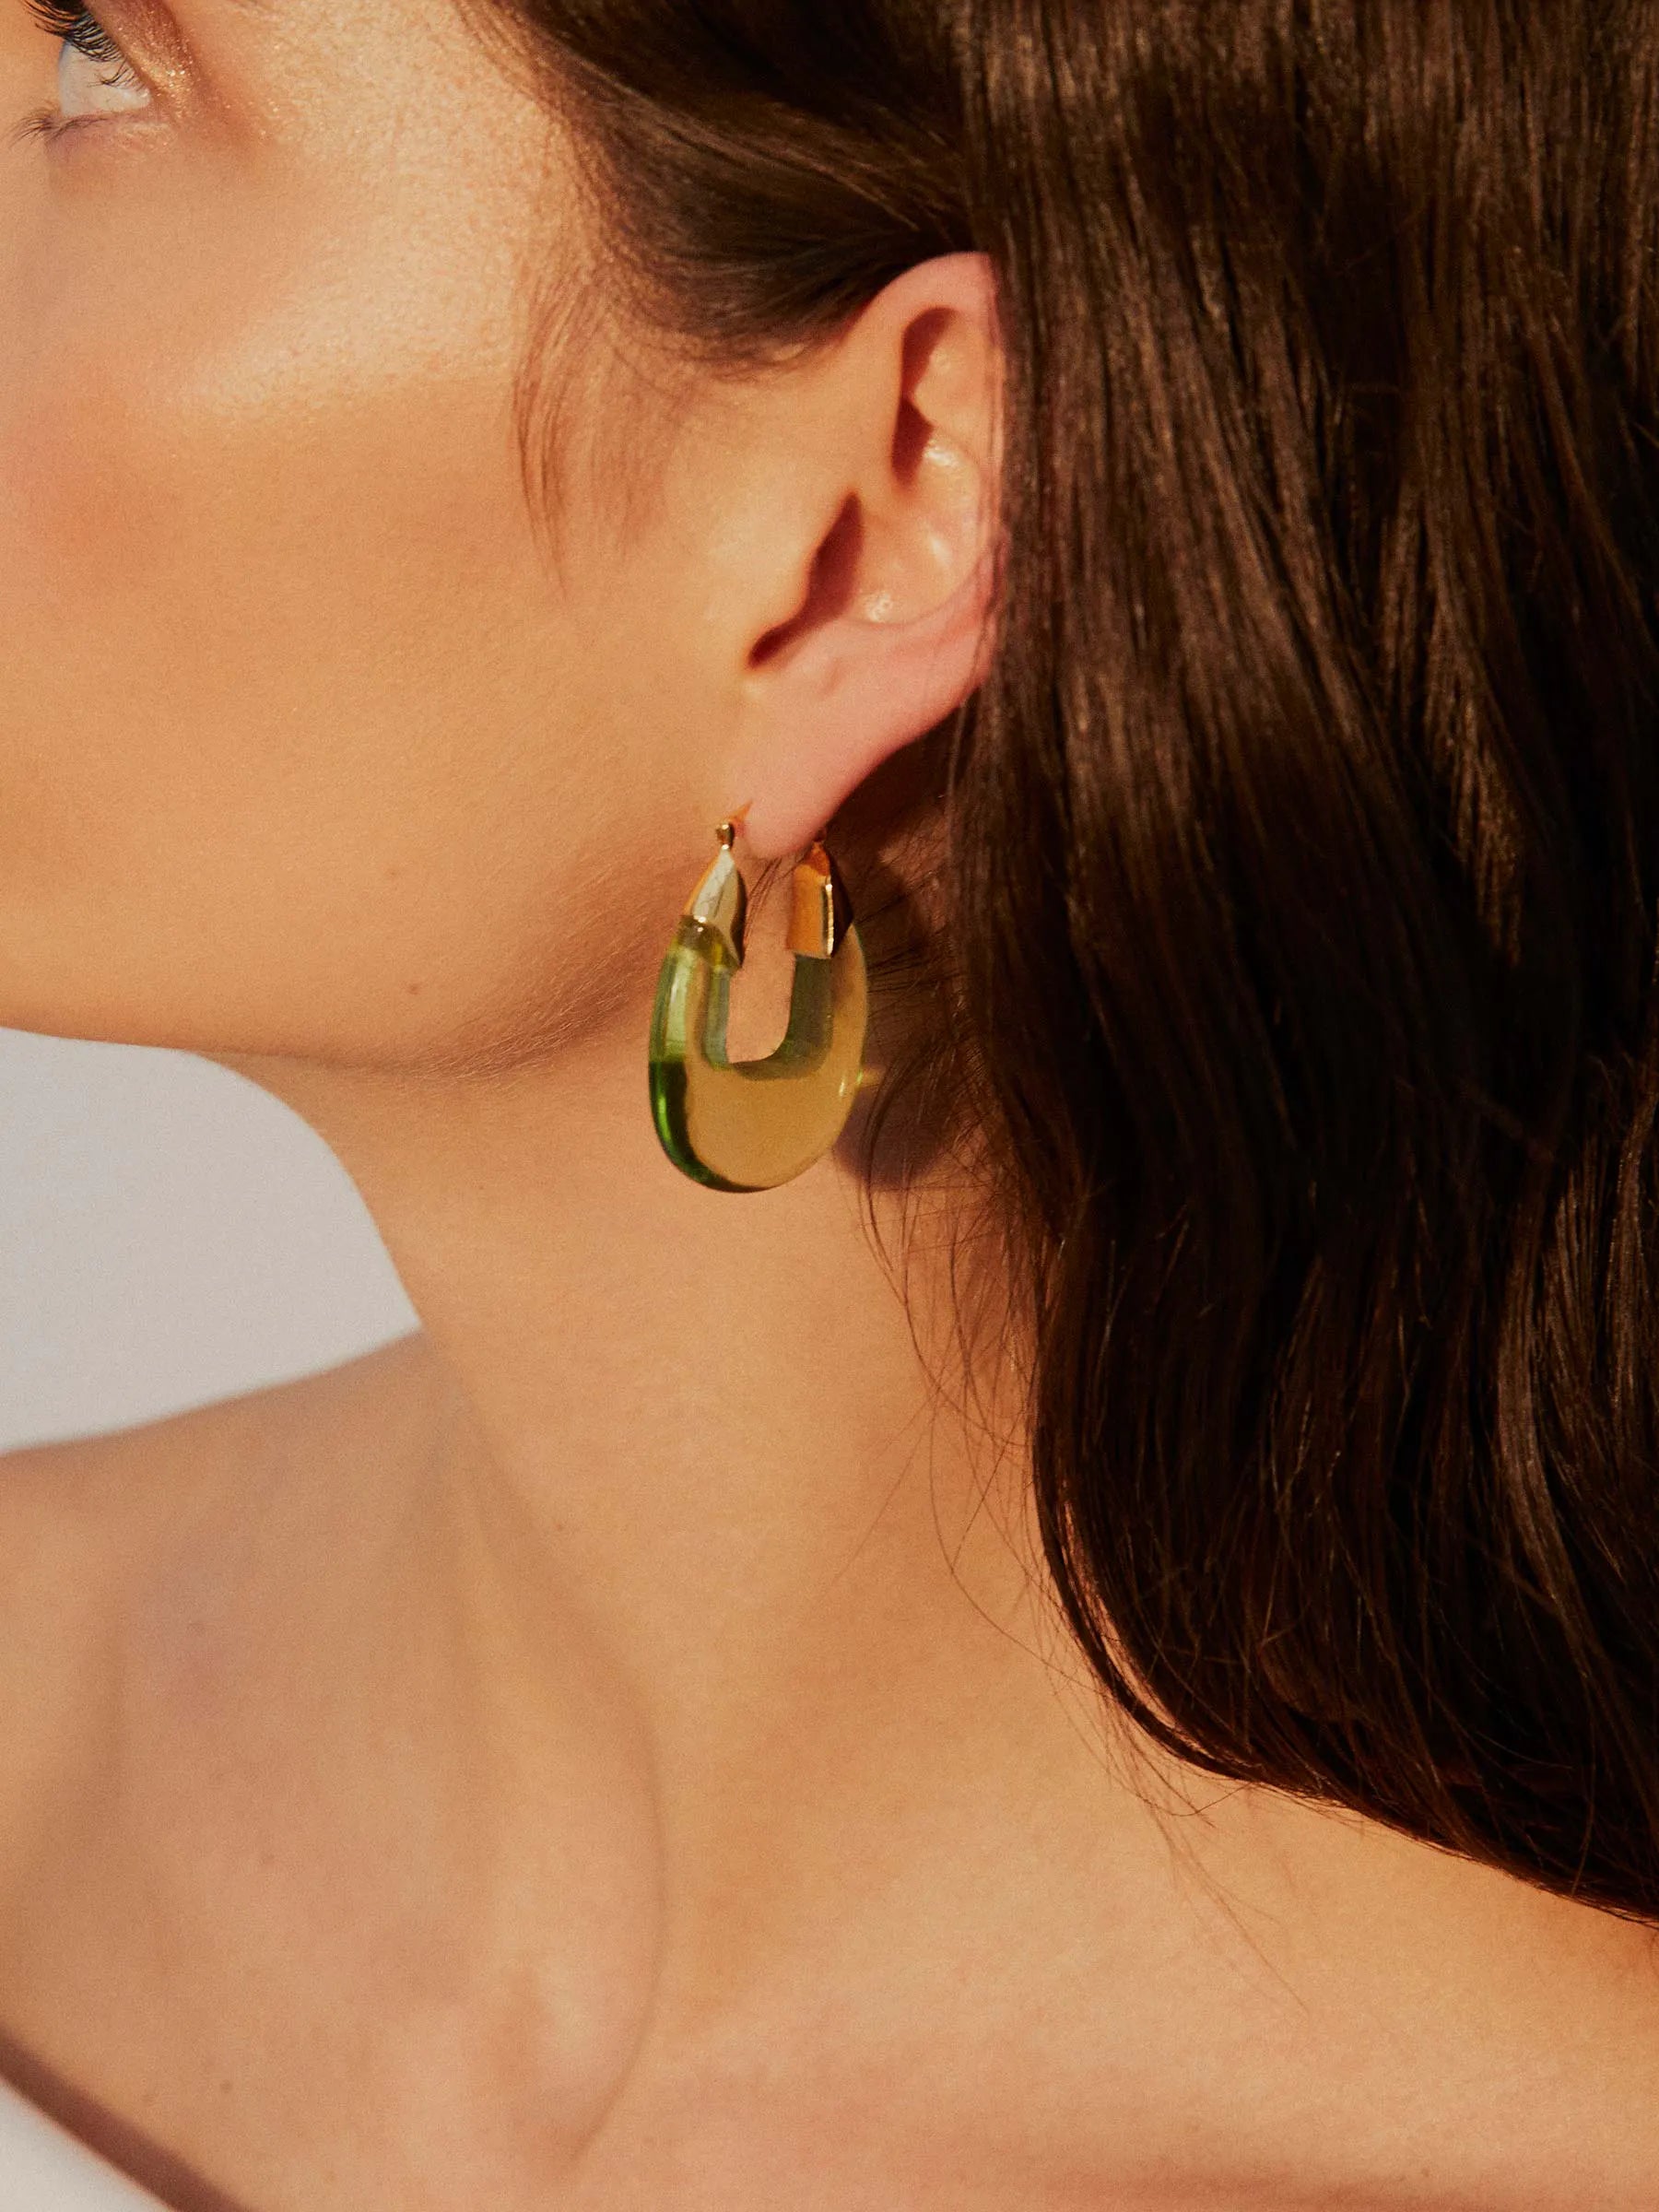 The model is wearing a pair of SHYLA - Rafelli Earrings - Gold hoop earrings.